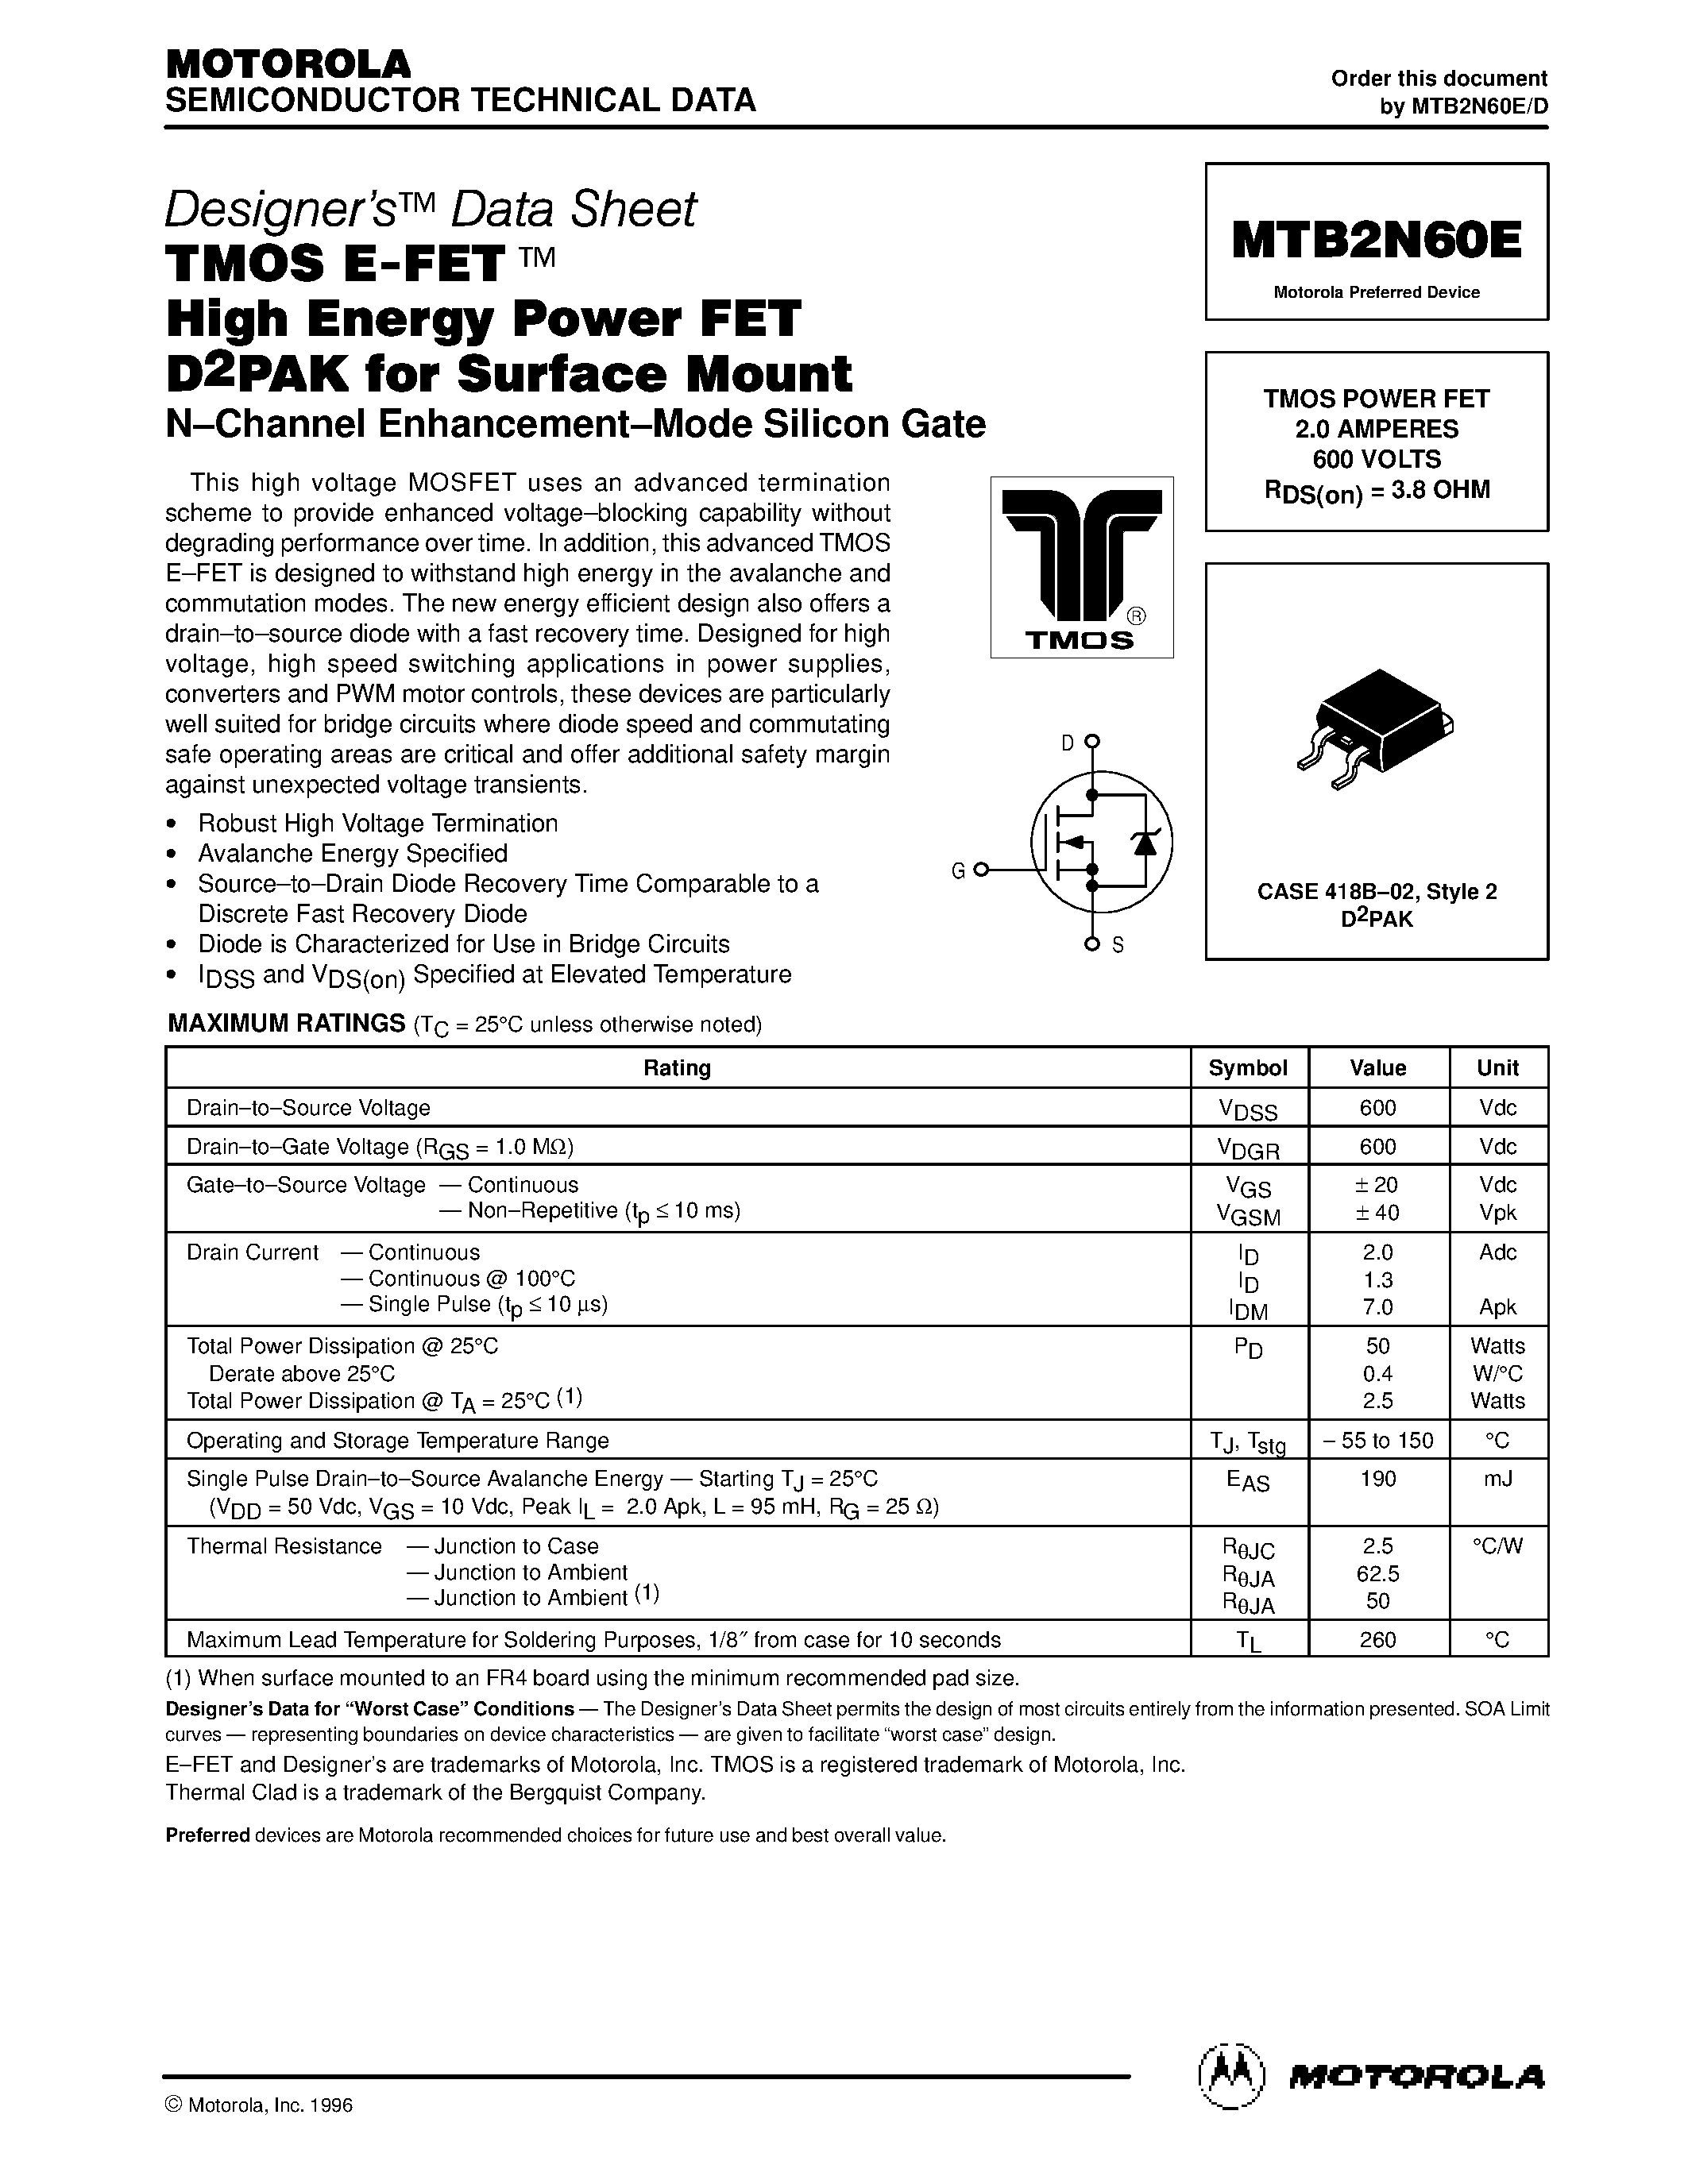 Datasheet MTB2N60E - TMOS POWER FET 2.0 AMPERES 600 VOLTS page 1